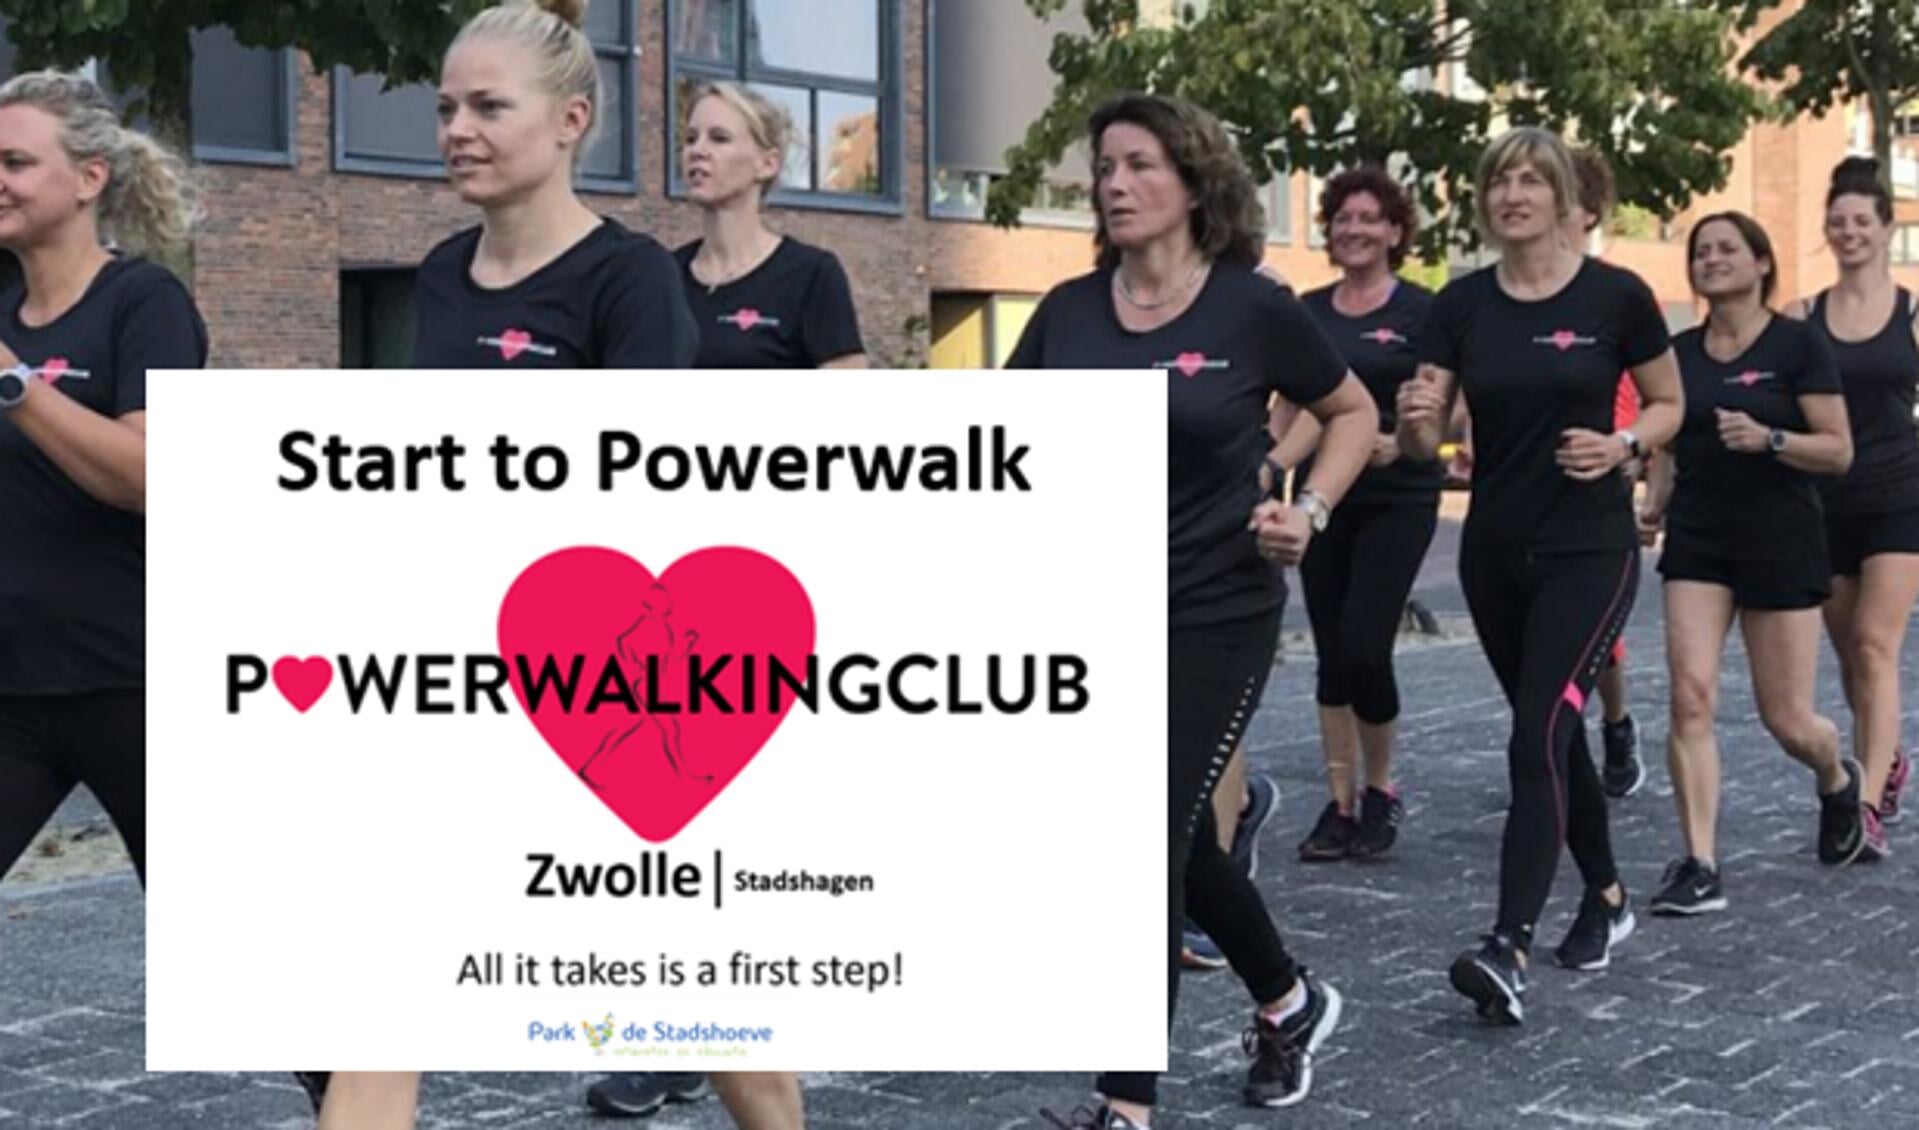 Powerwalkingclub Zwolle ( Stadshagen) organiseert Start to Powerwalk vanaf Park de Stadshoeve